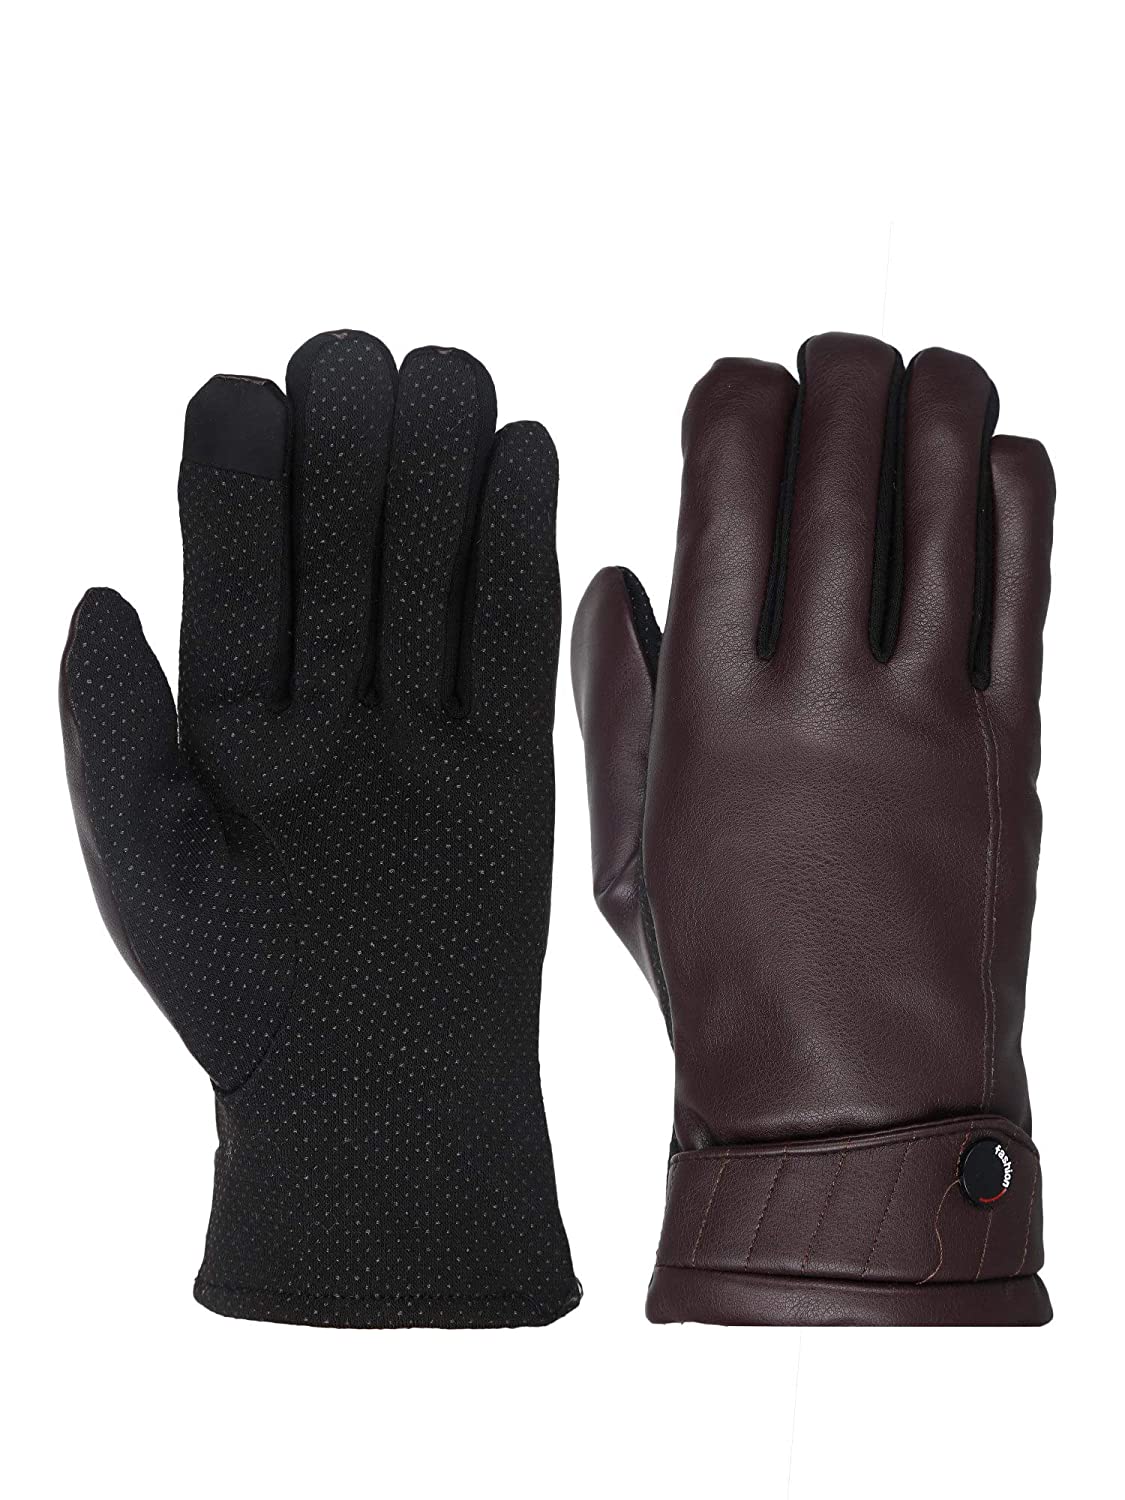 FabSeasons water-resistant winter gloves